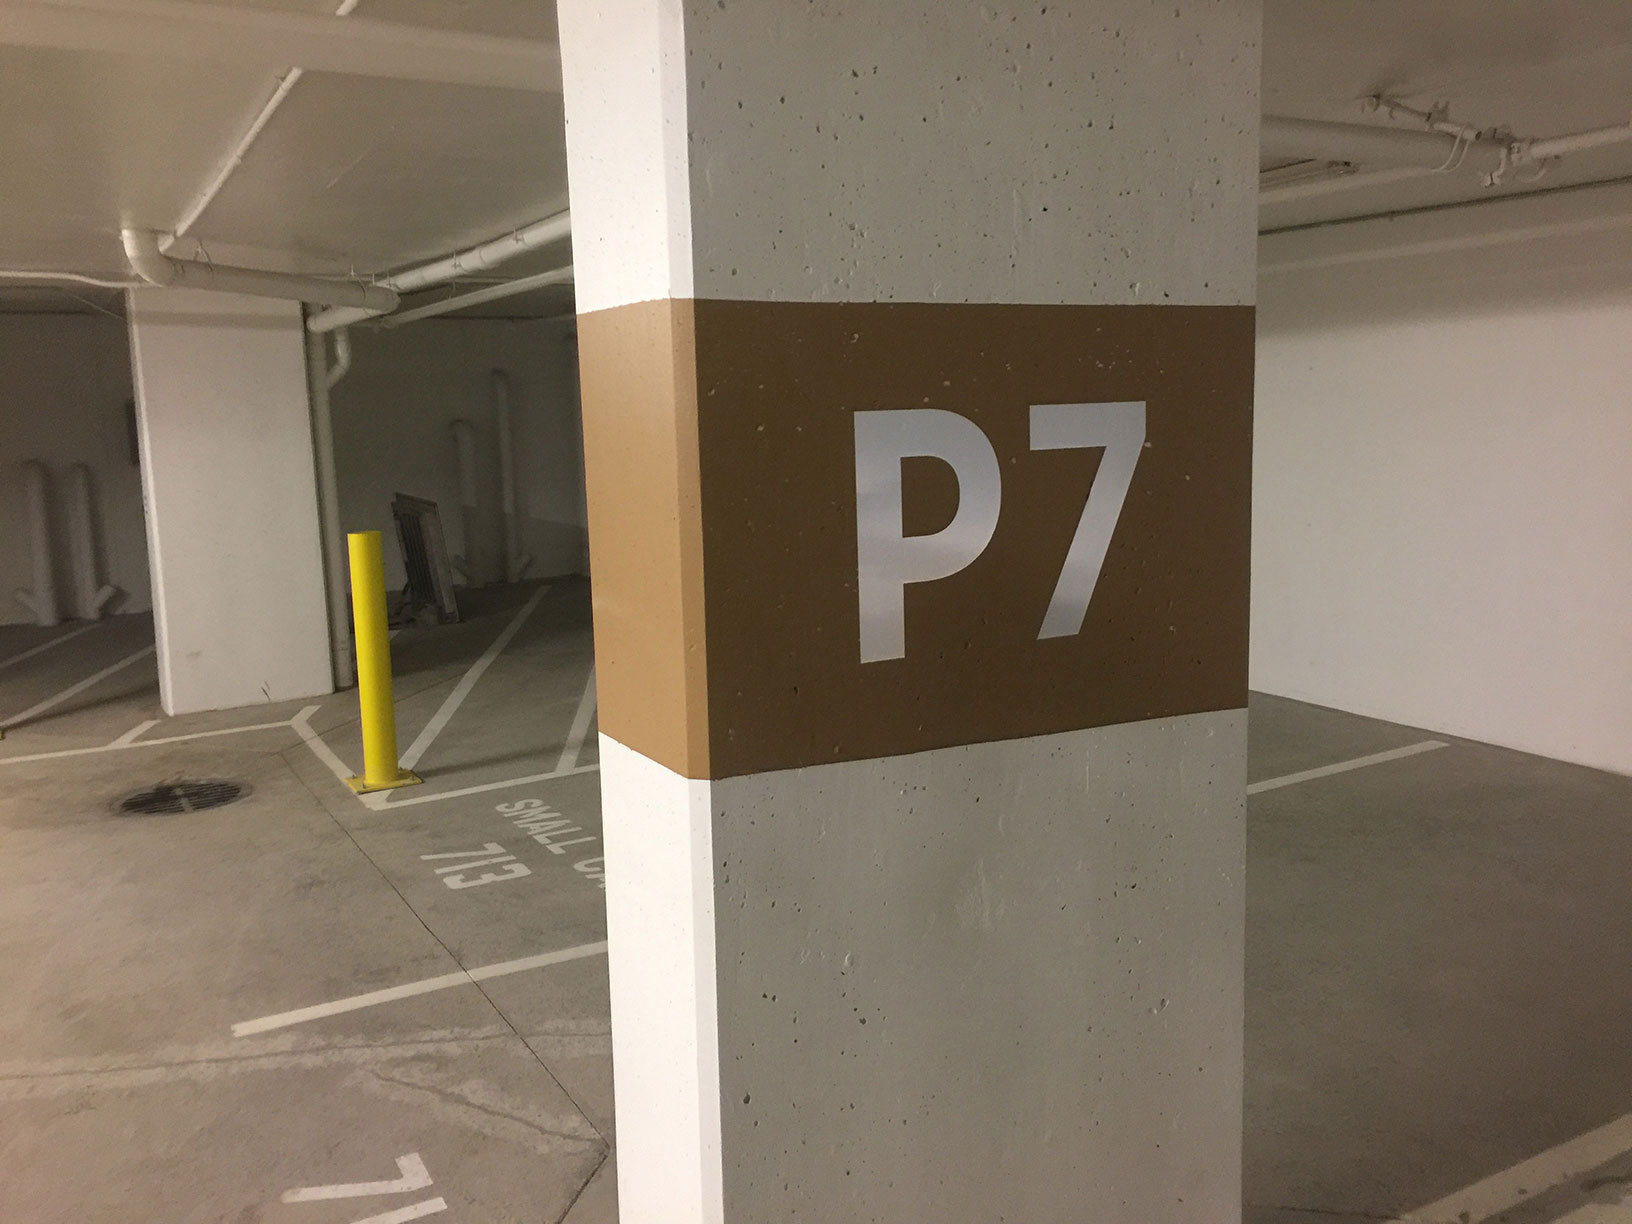 Parking Level 7!